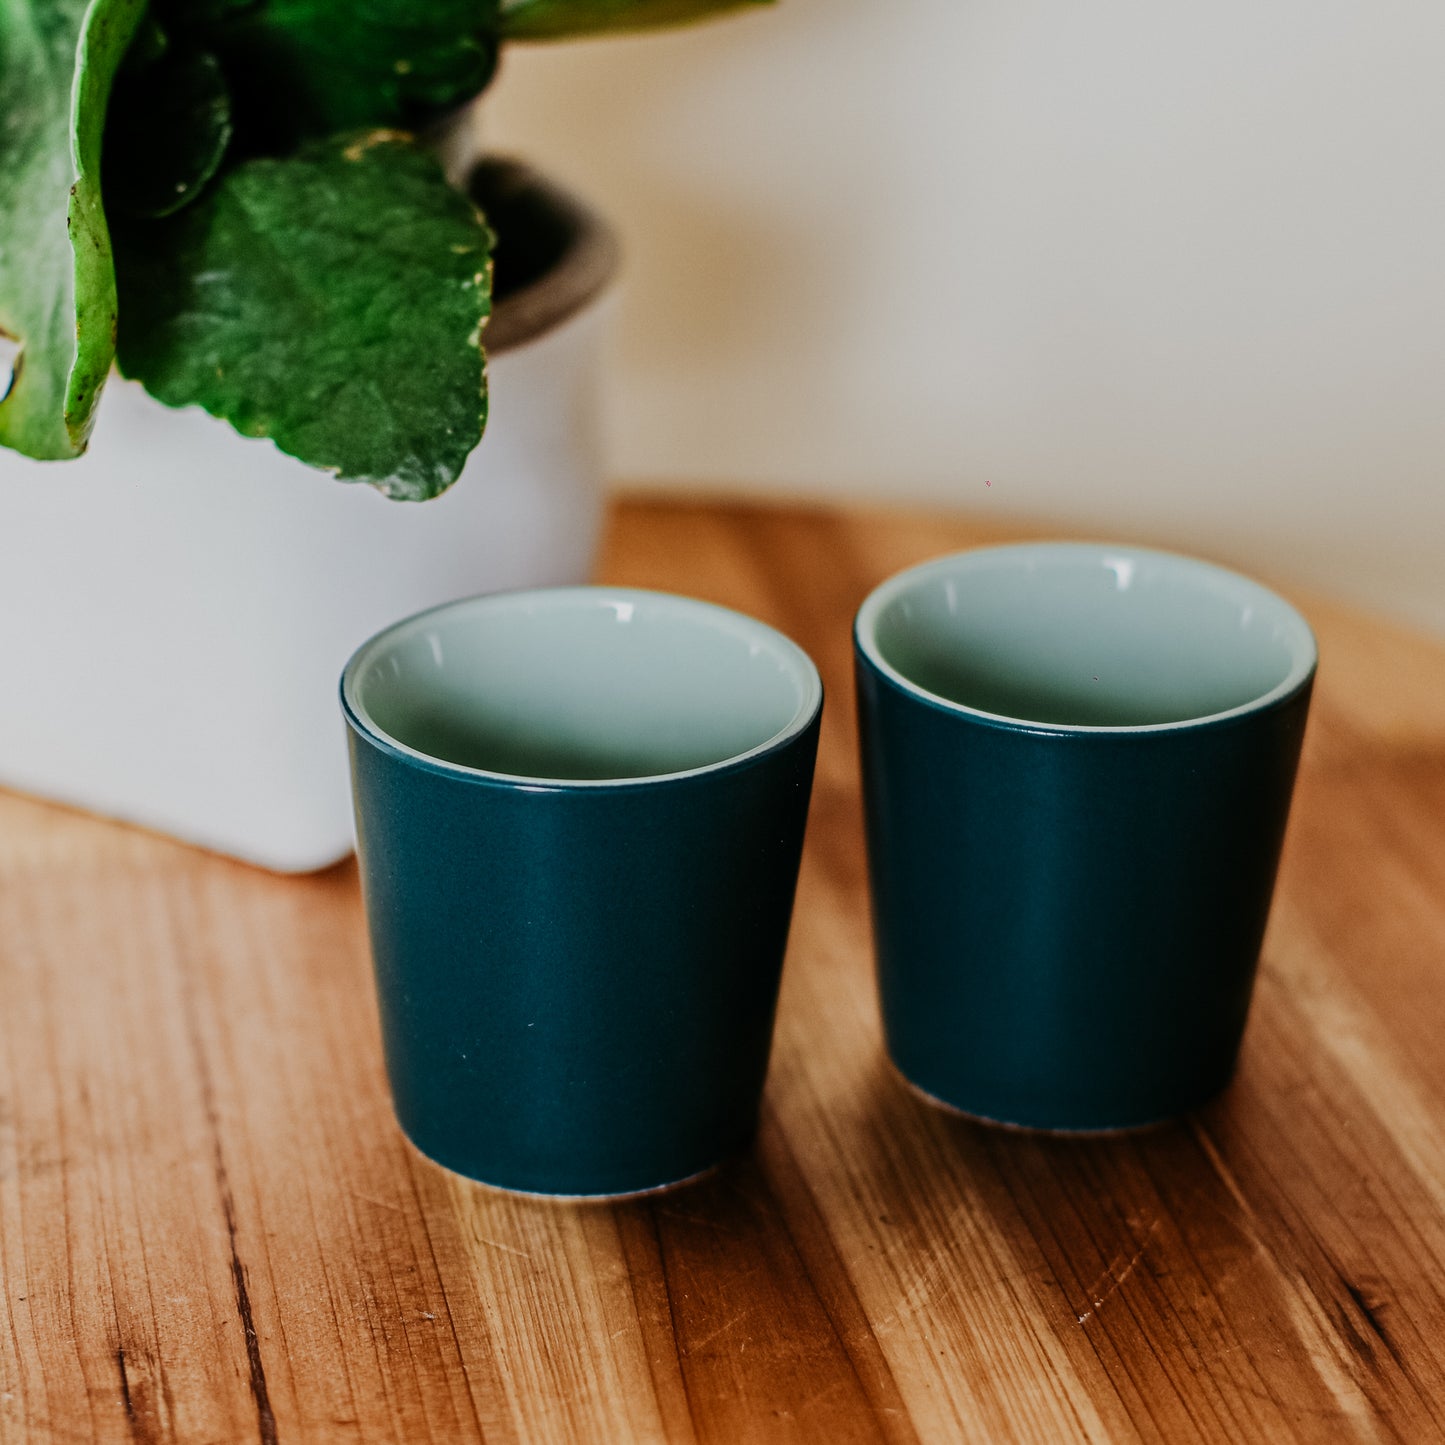 Espresso Ceramic Nesting Cups